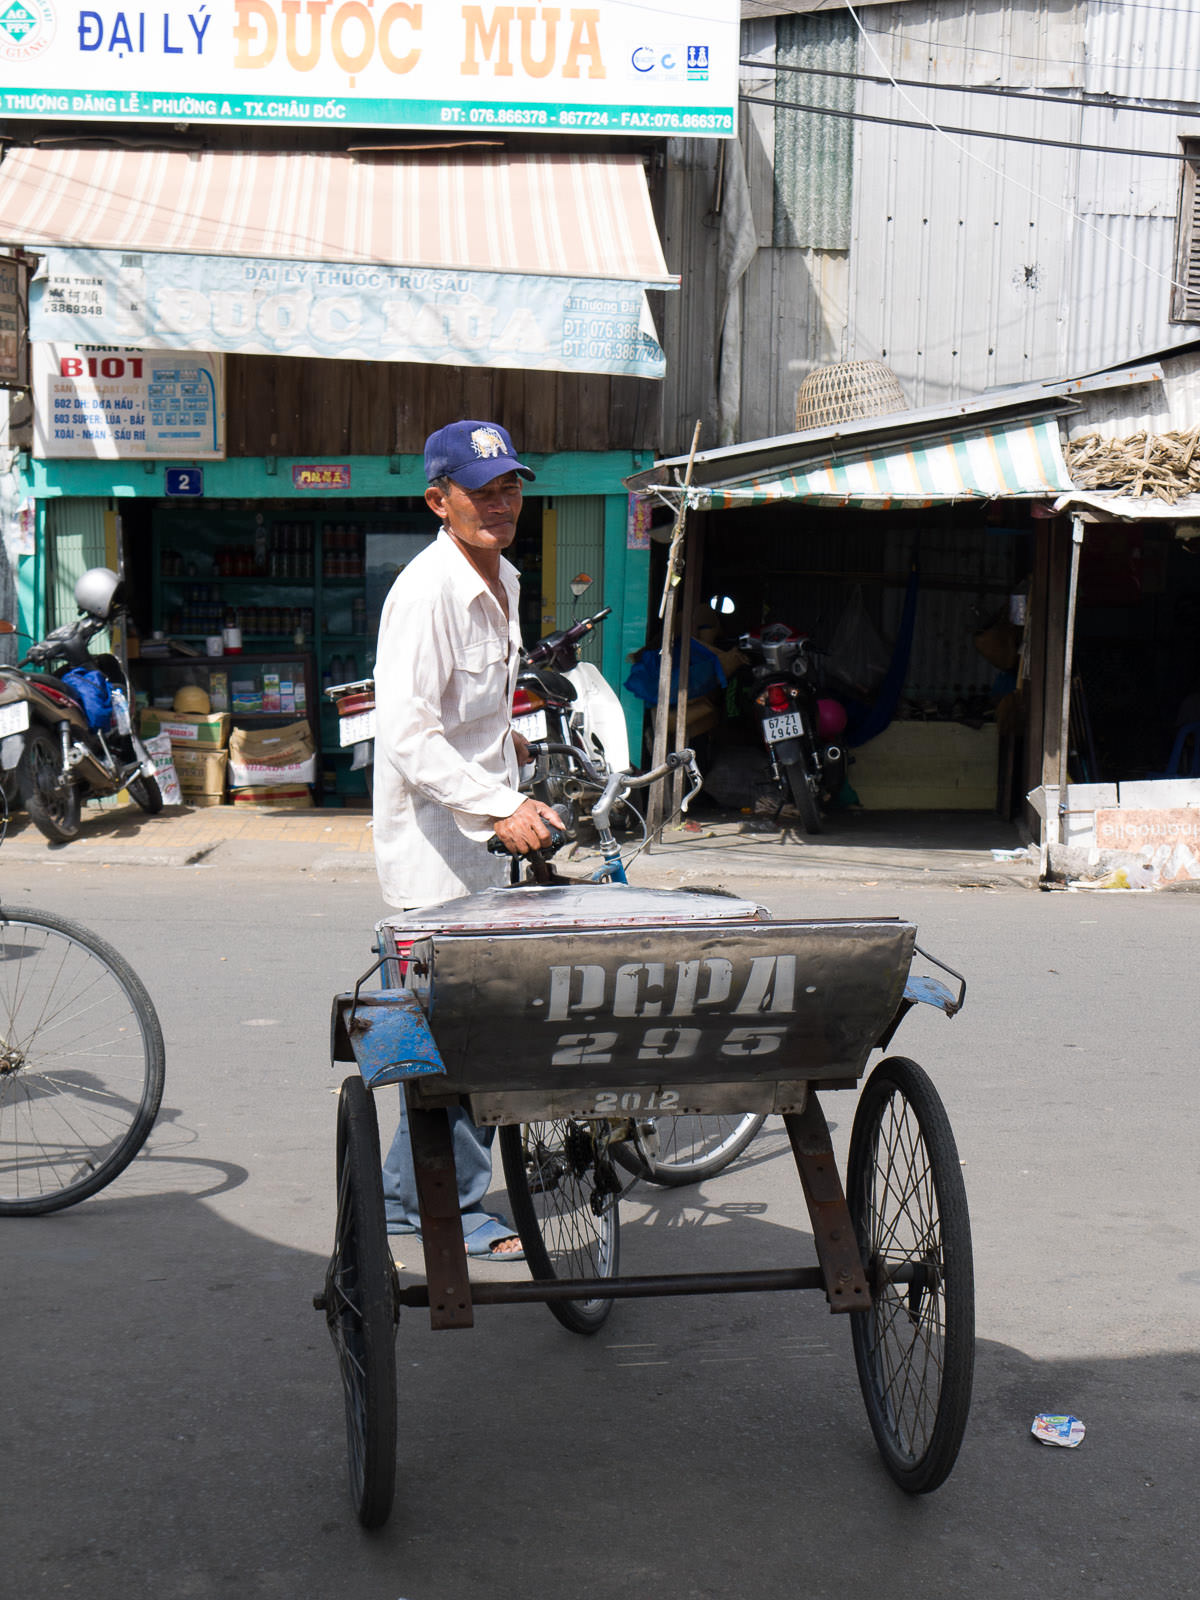 My rickshaw driver